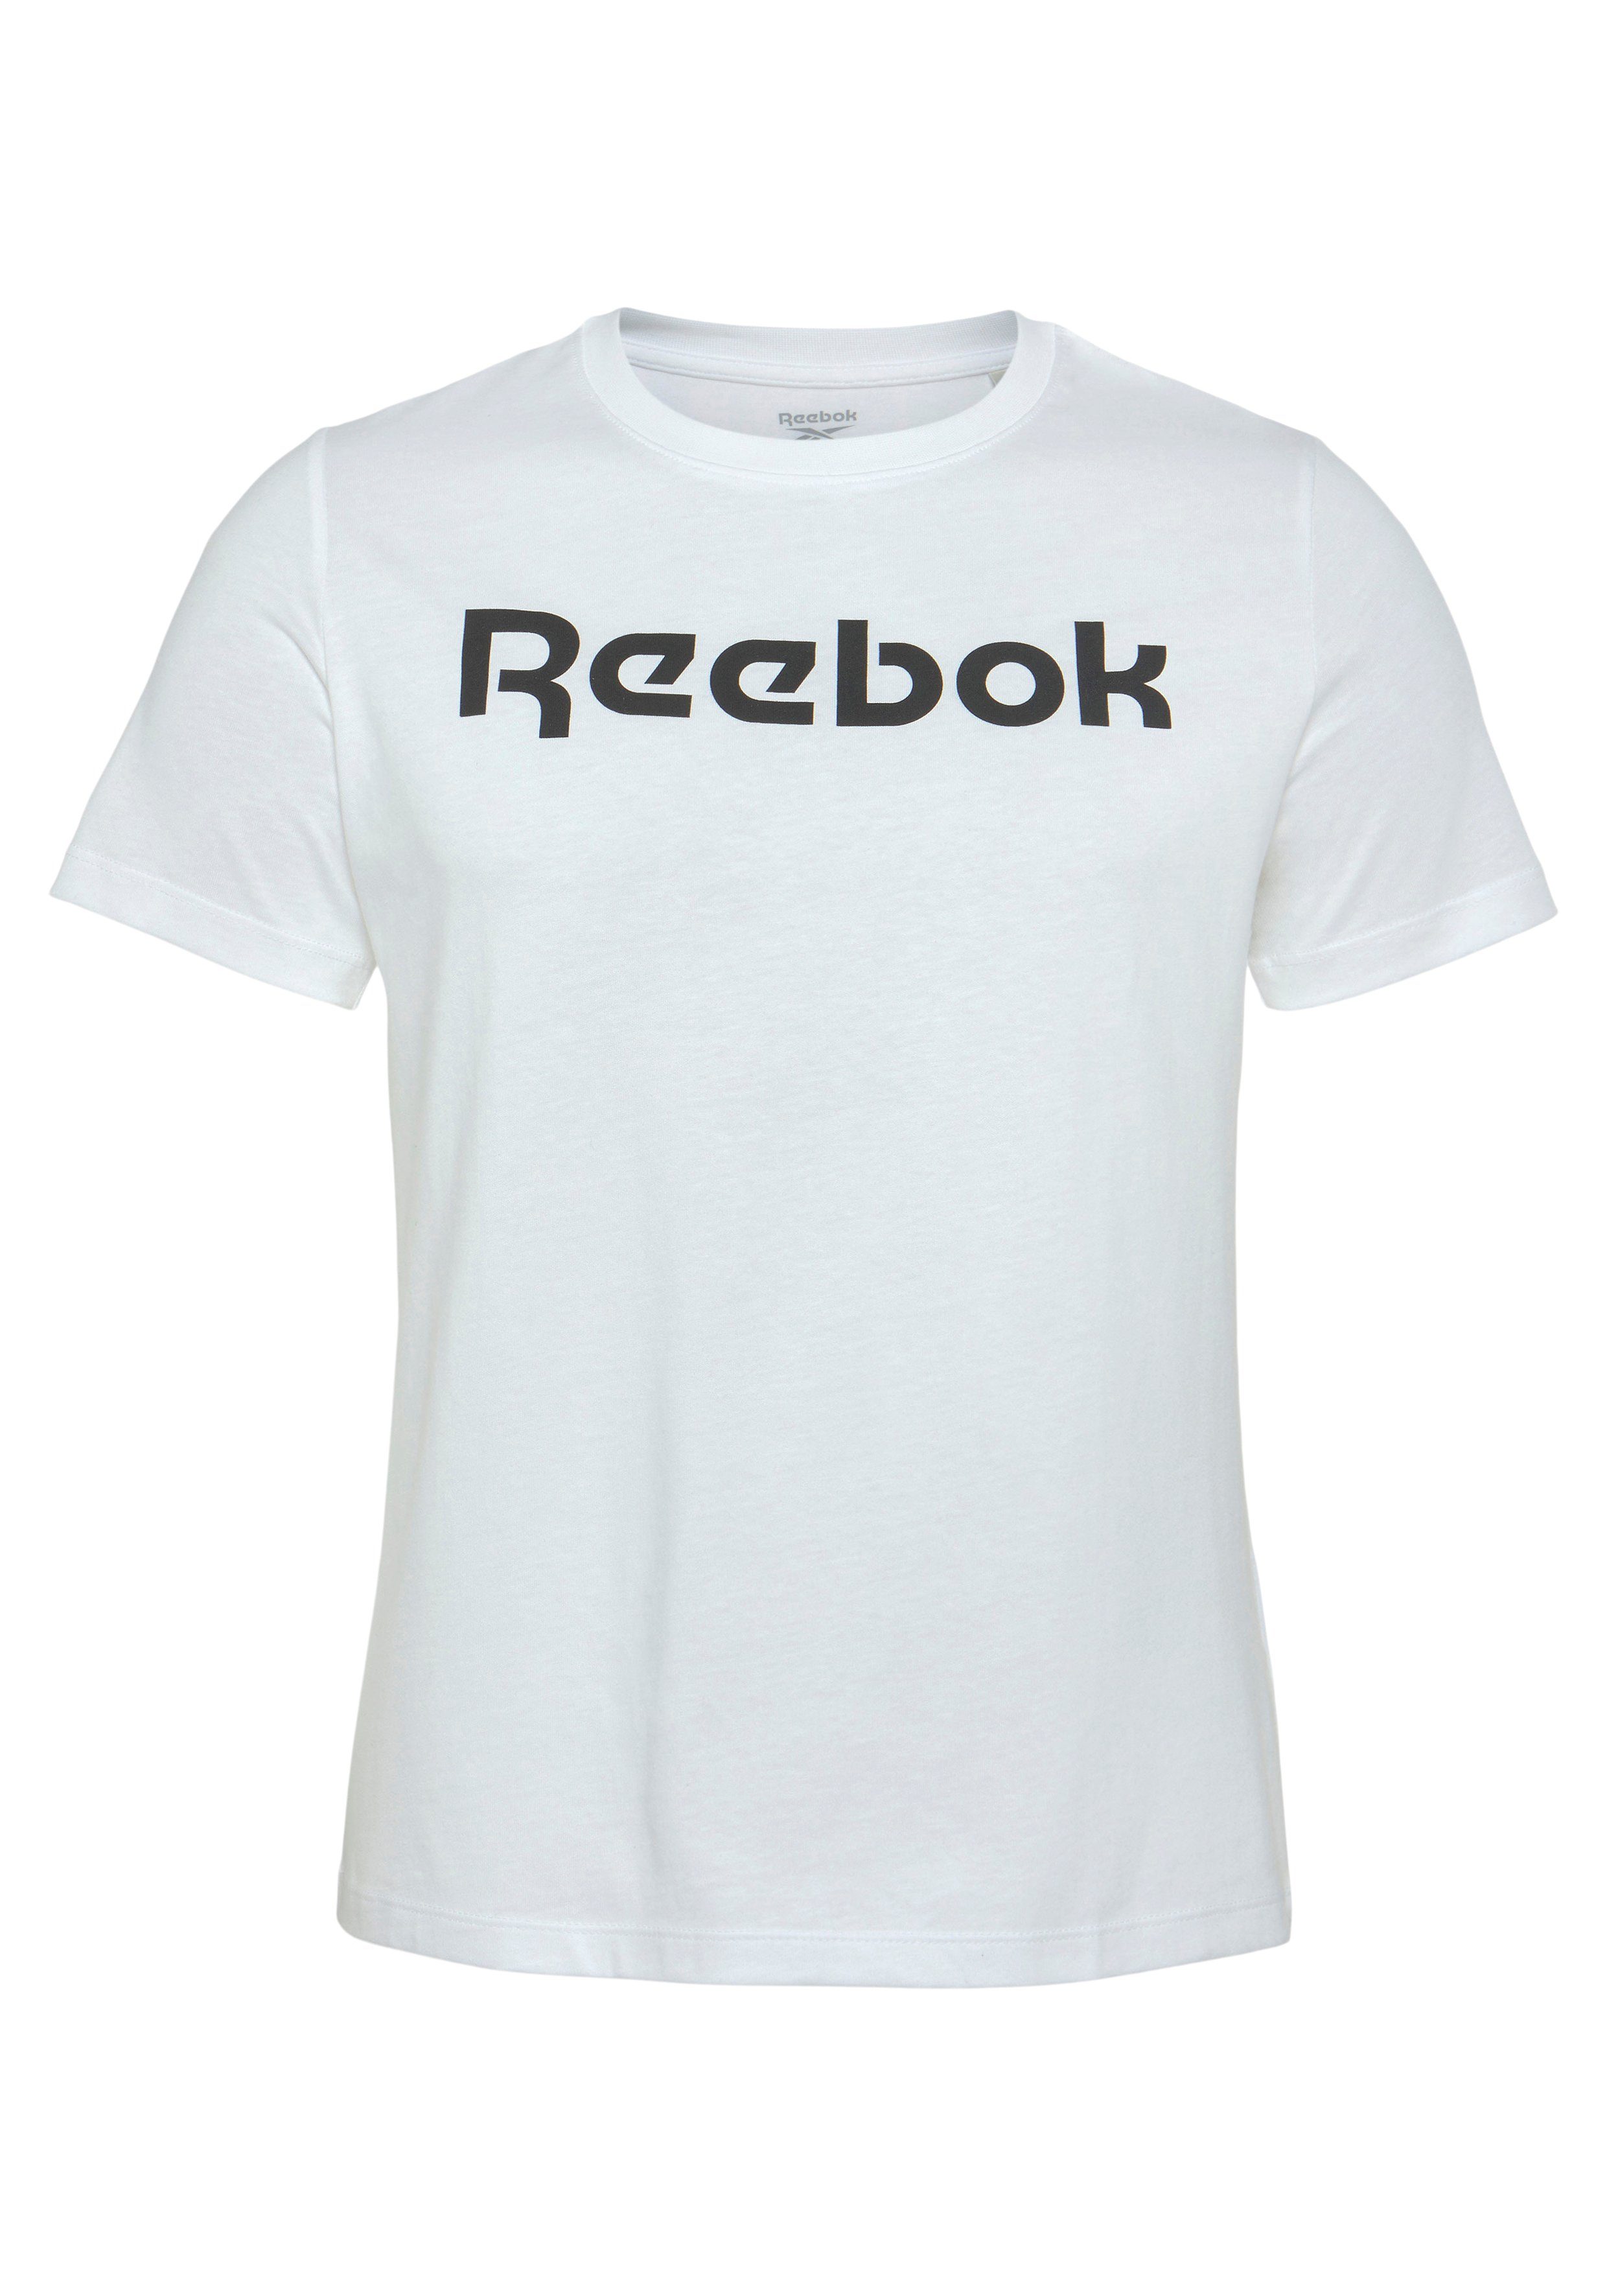 Reebok T-Shirt Tee white Graphic Reebok Read